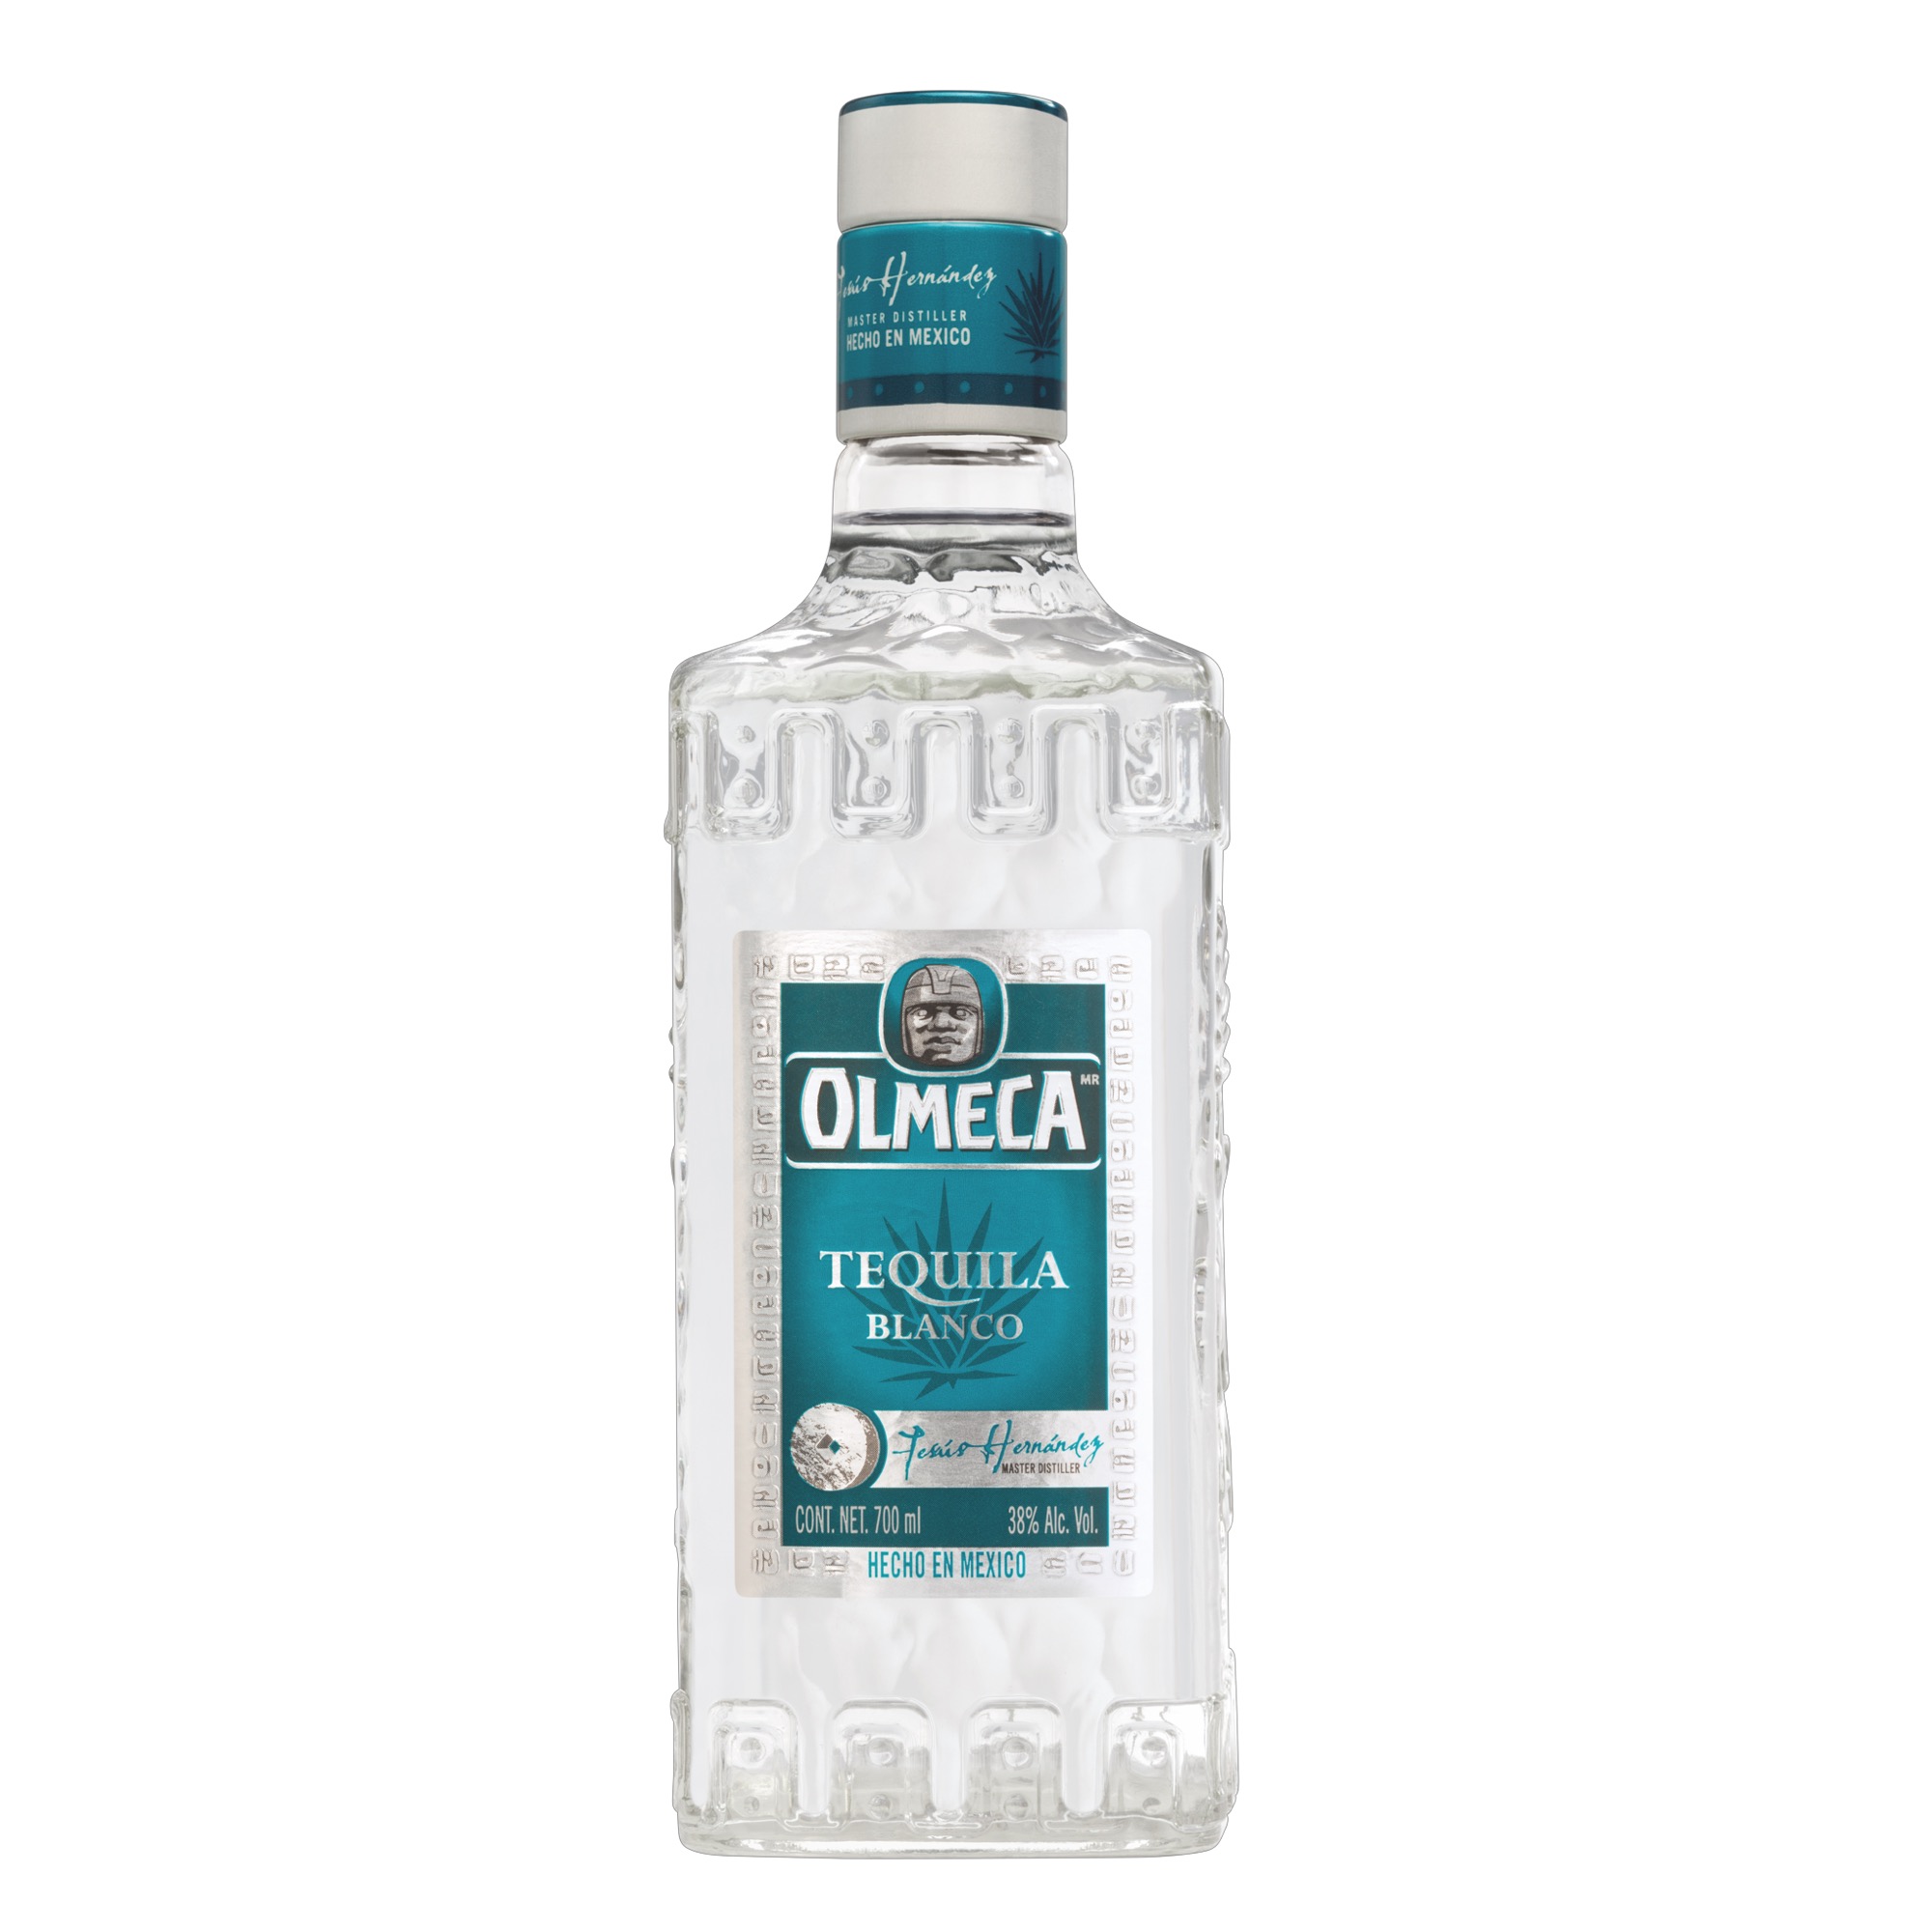 Olmeca Tequila 38% 0,7l, Blanco